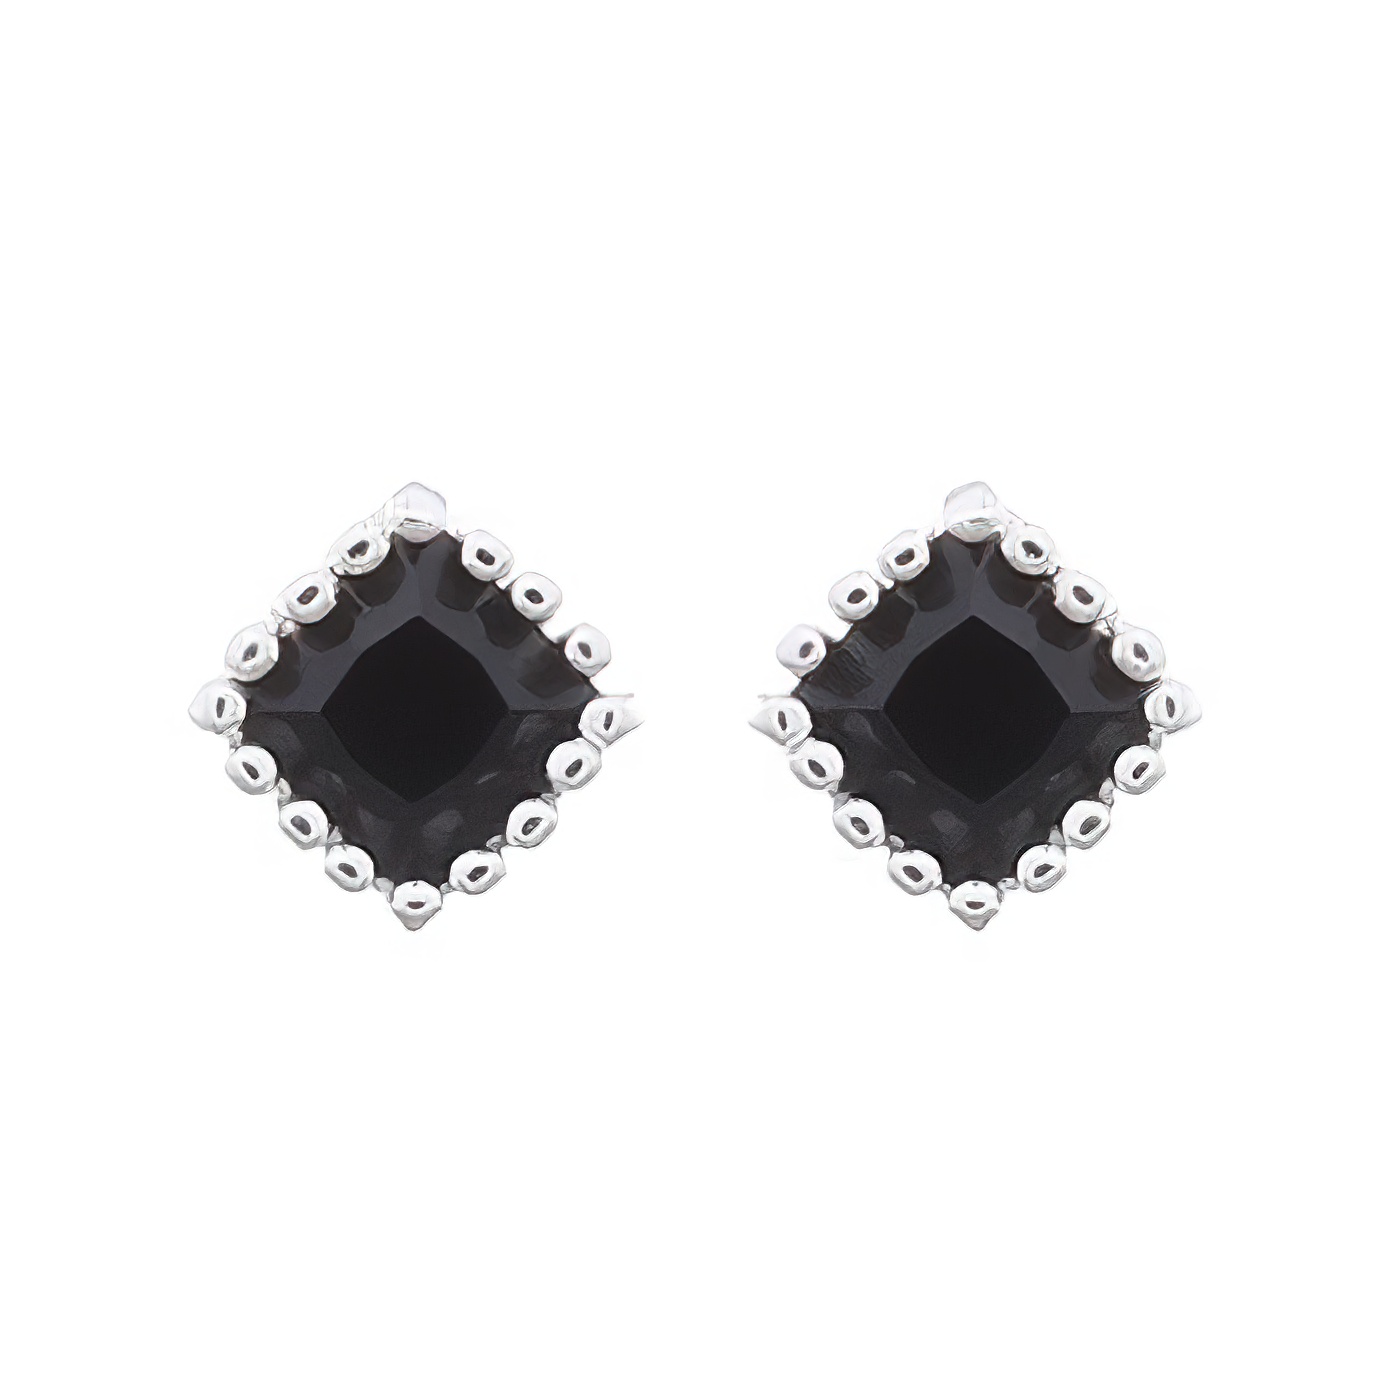 Mini Square Black CZ Sterling Sliver Stud Earrings by BeYindi 